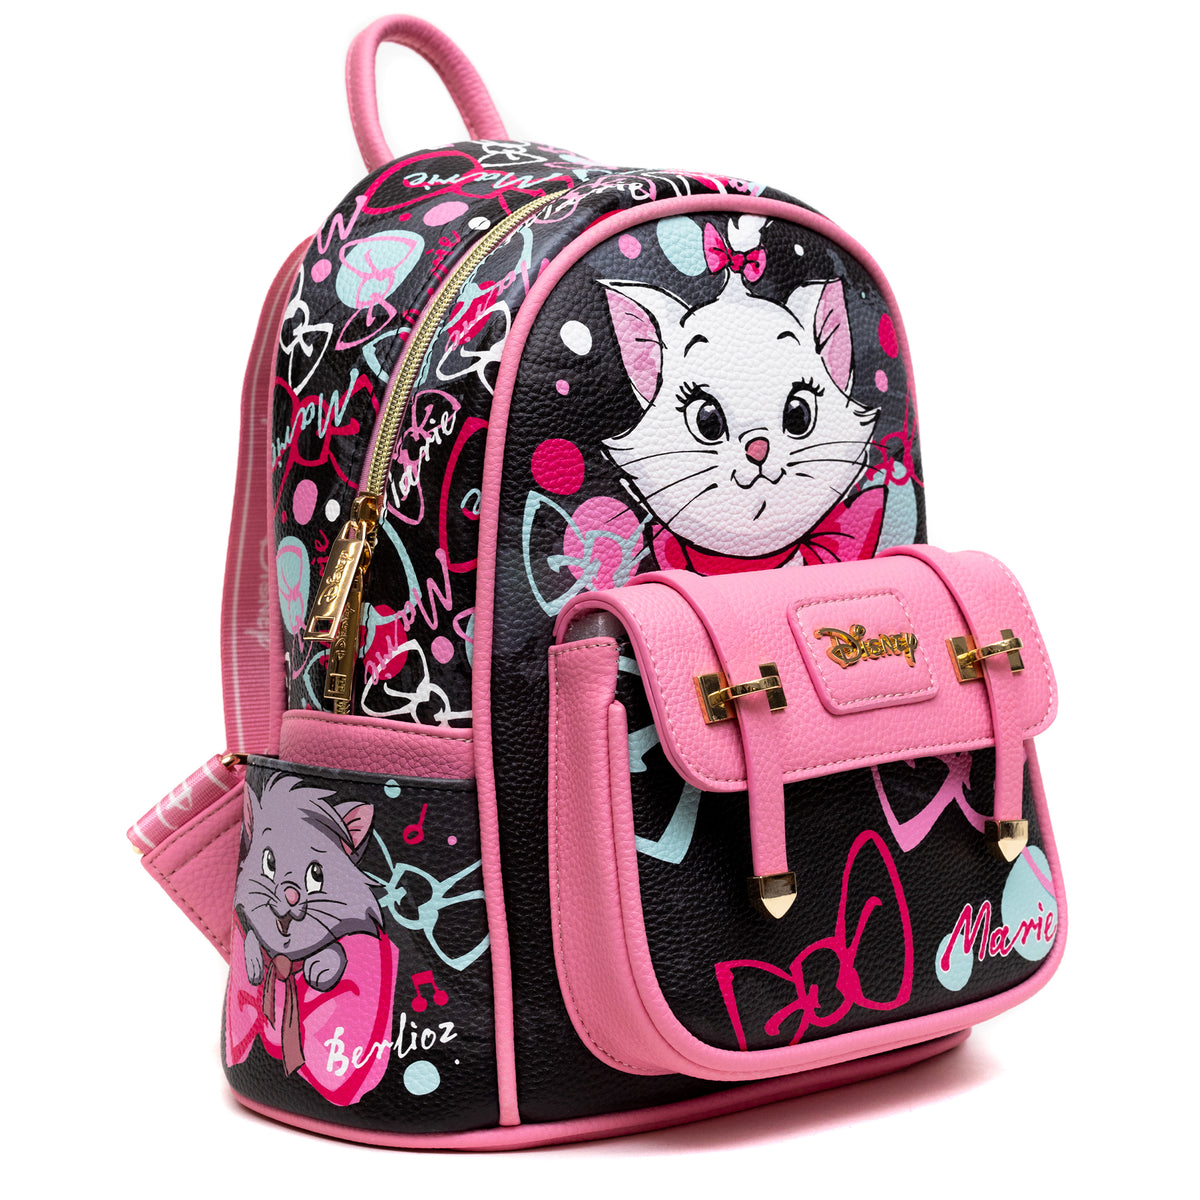 Disney The Aristocats Marie Mini Backpack